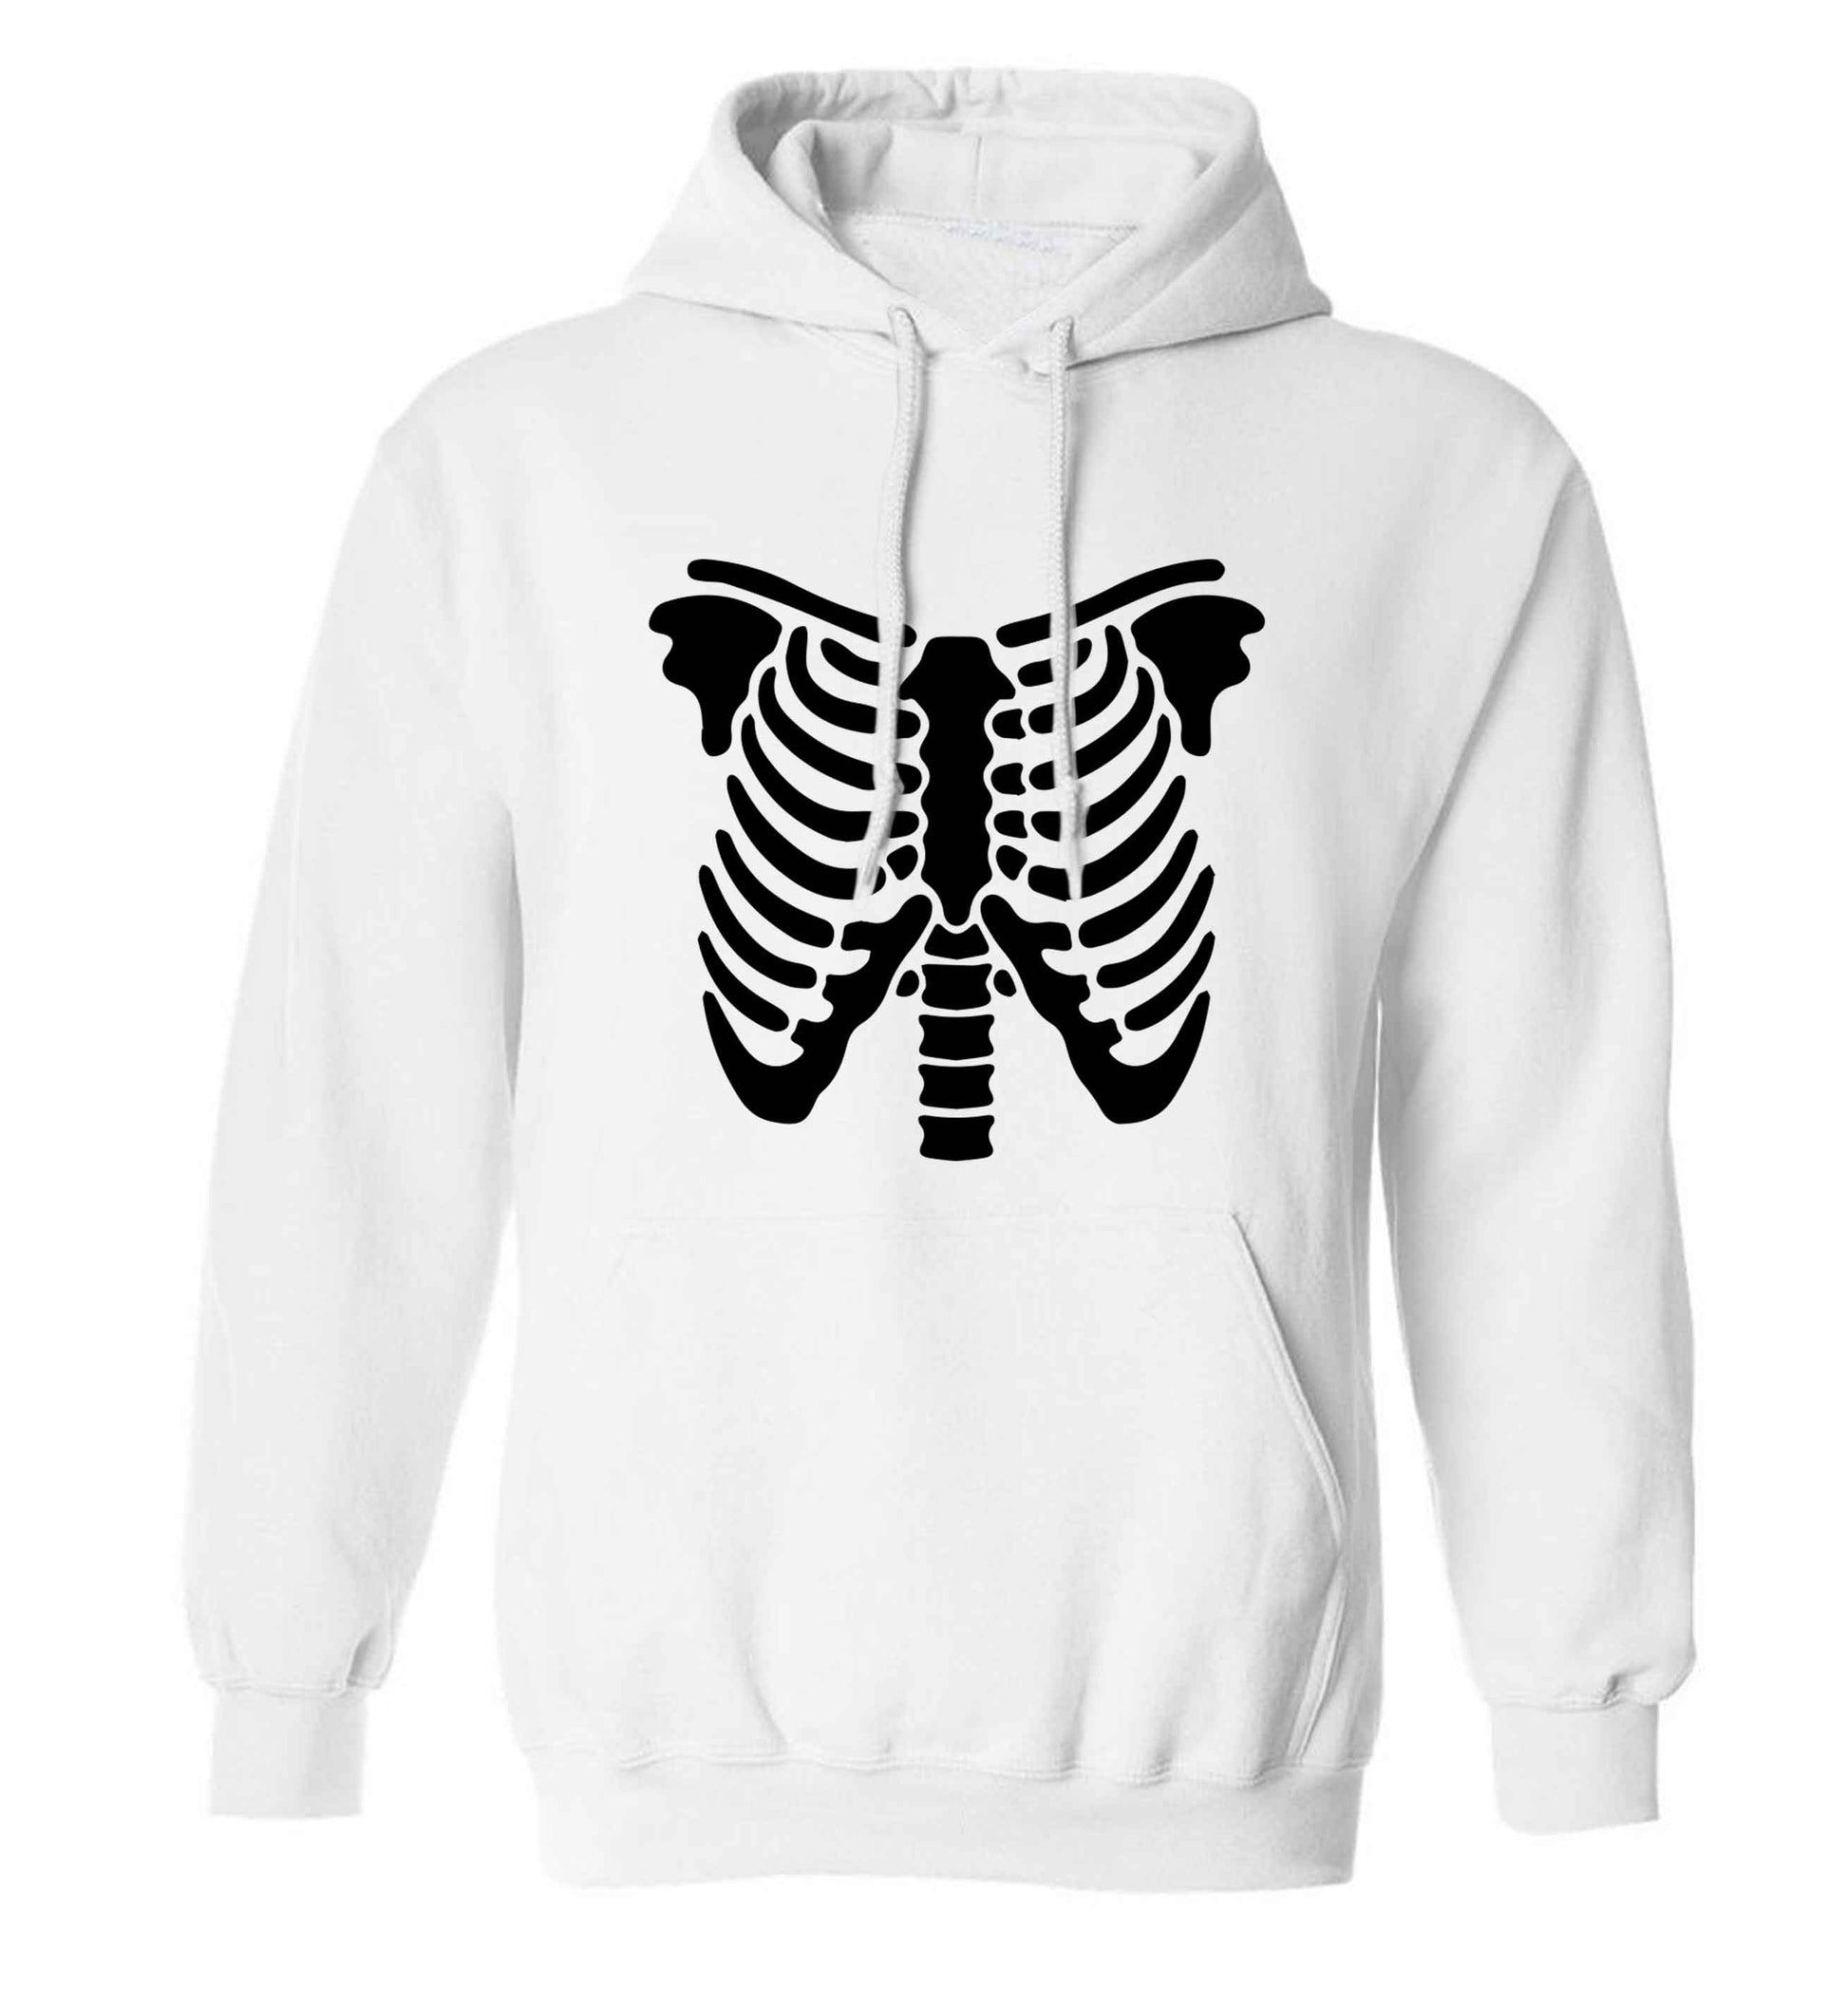 Skeleton ribcage adults unisex white hoodie 2XL